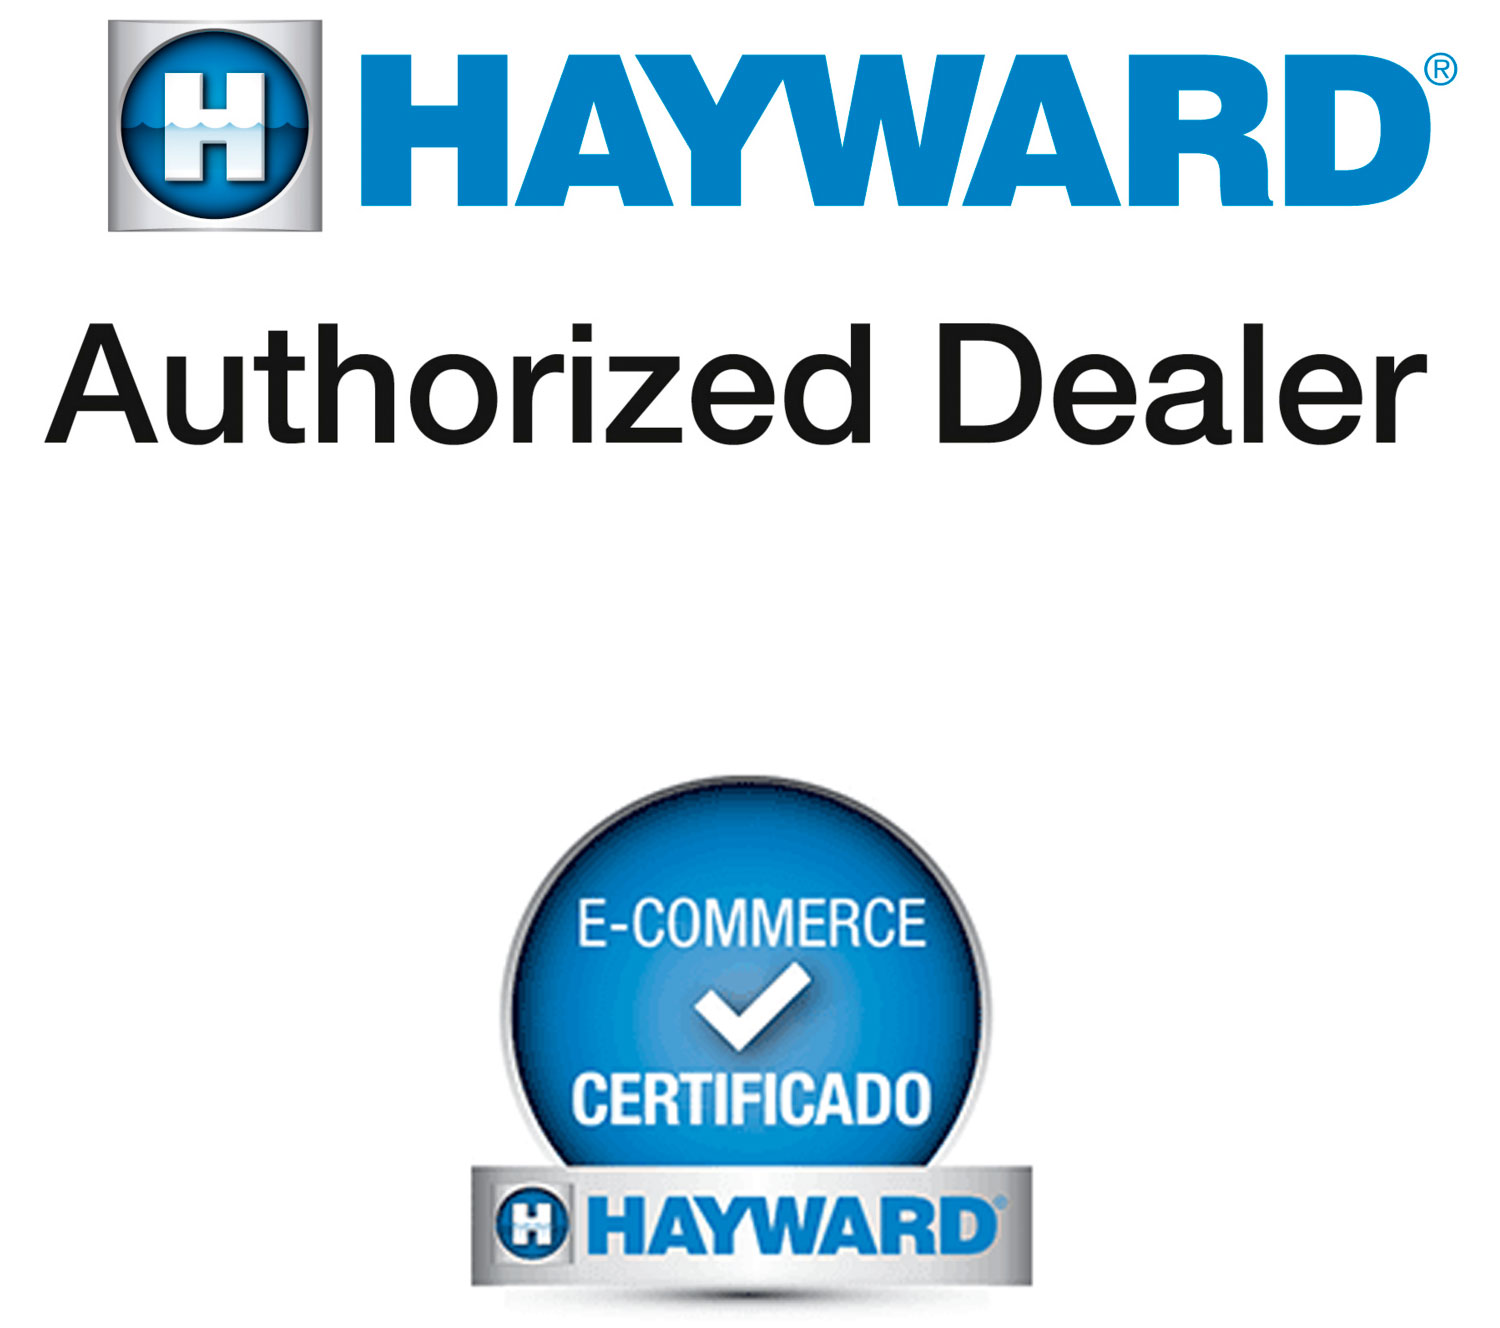 Hayward-e-commerce-autorizado-w.jpg